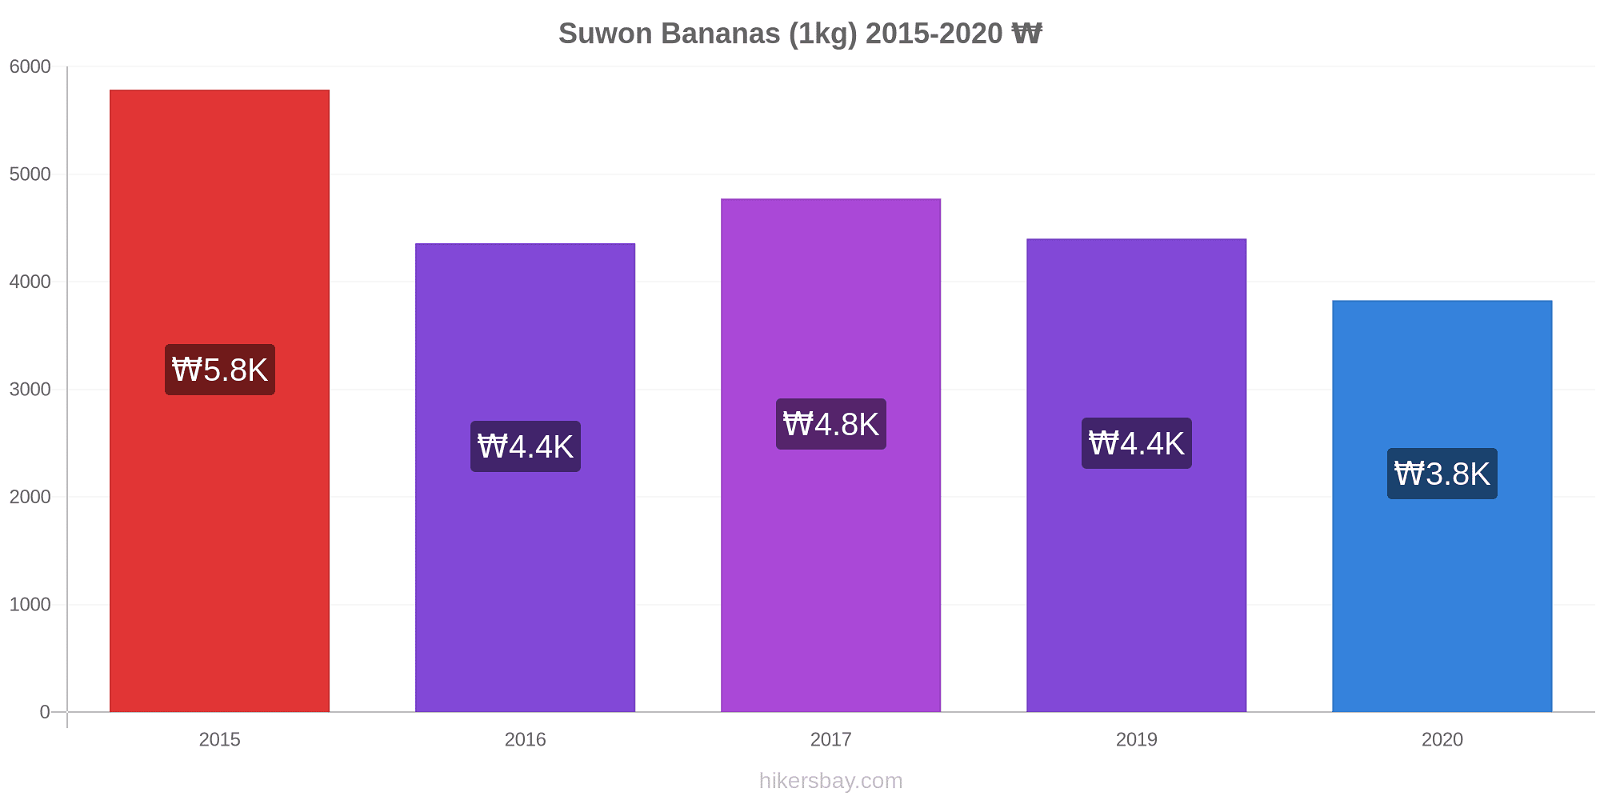 Suwon price changes Bananas (1kg) hikersbay.com